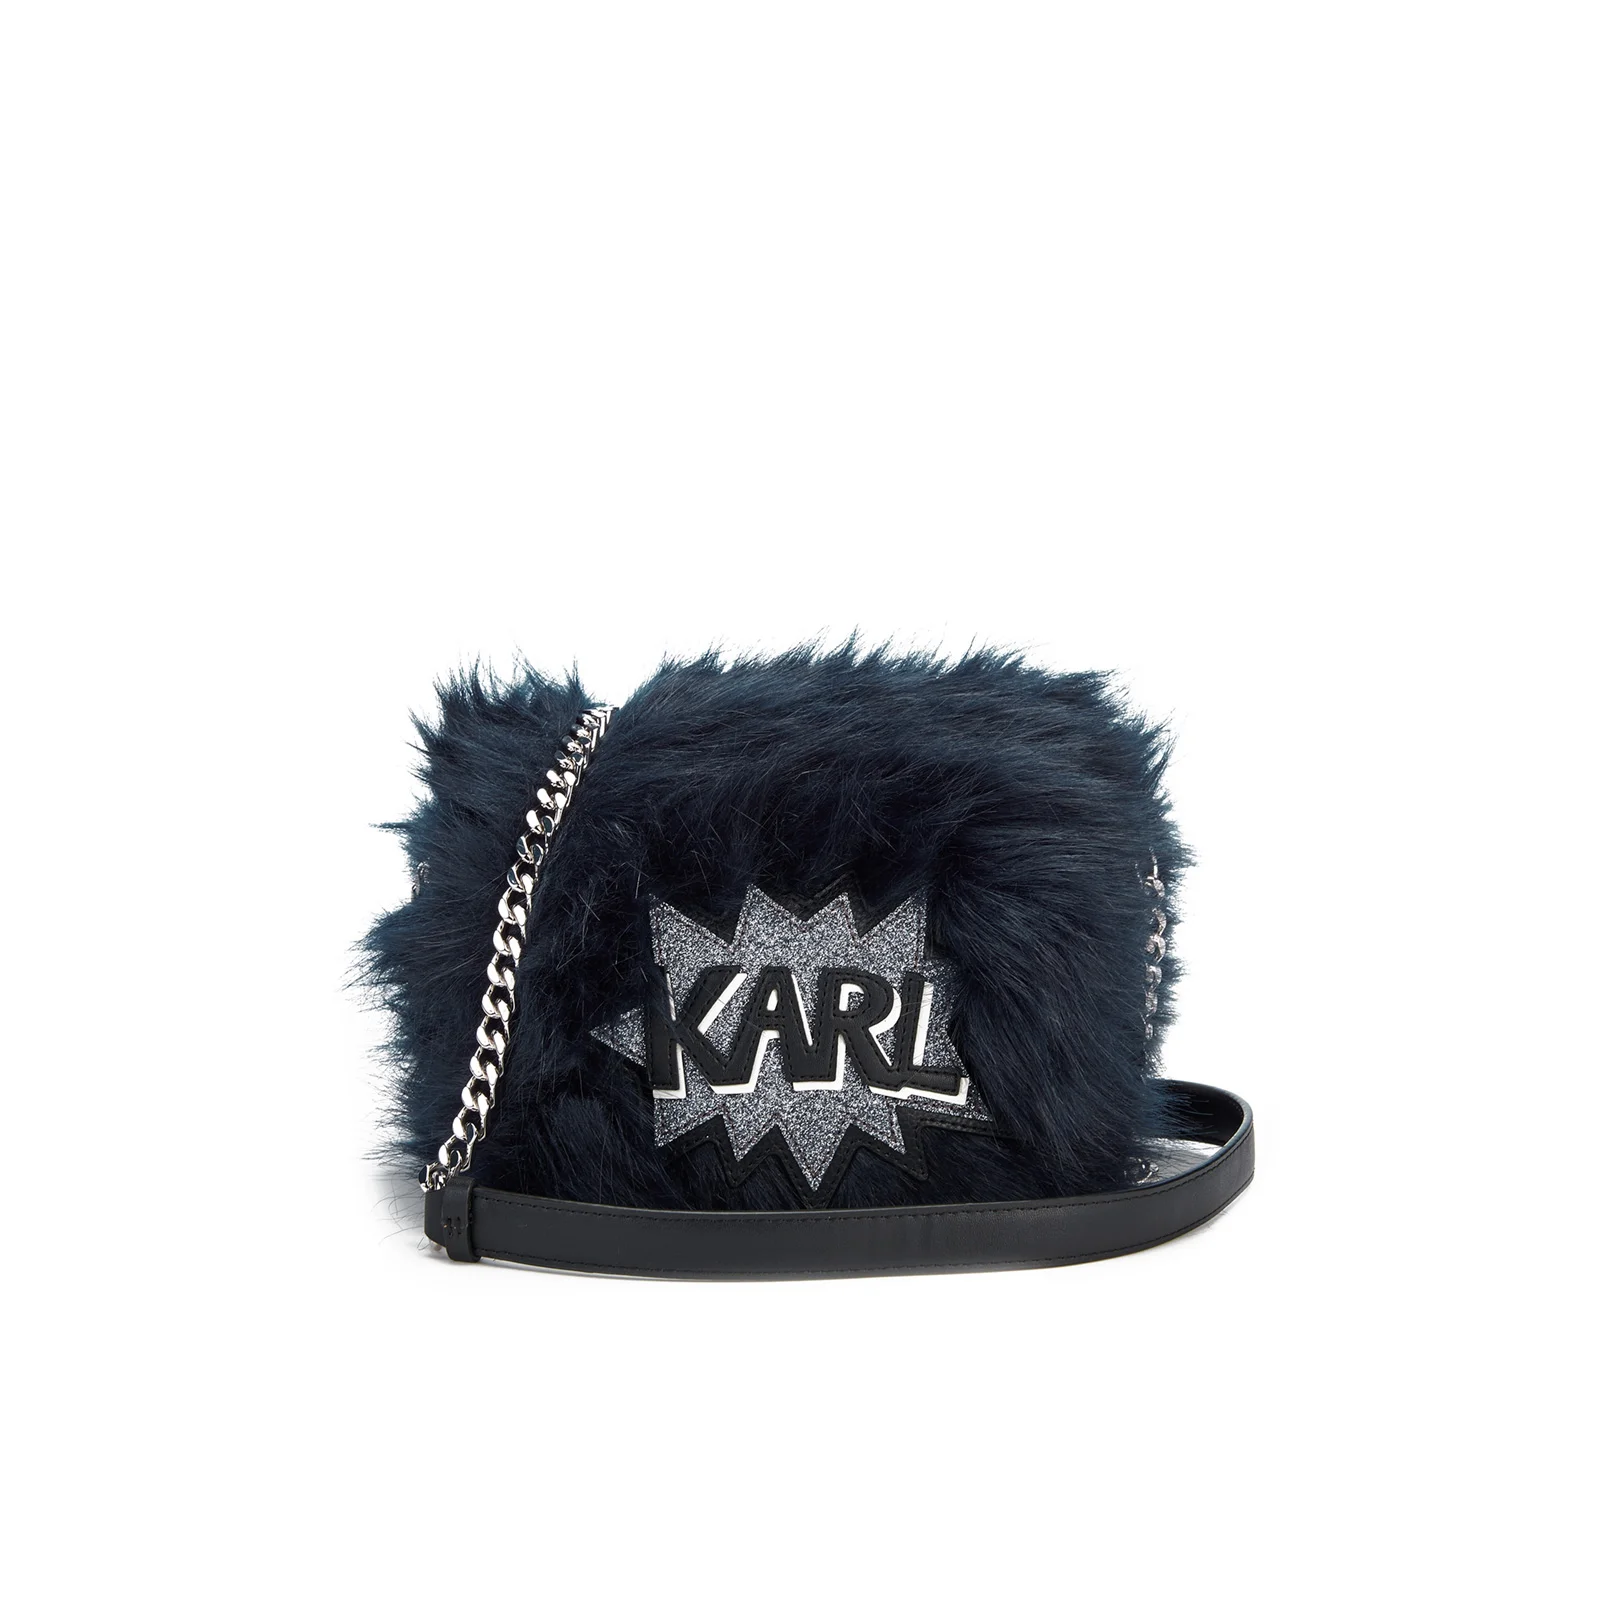 Karl Lagerfeld Women's K/Pop Fuzzi Cross Body Bag - Dark Sapphire Image 1